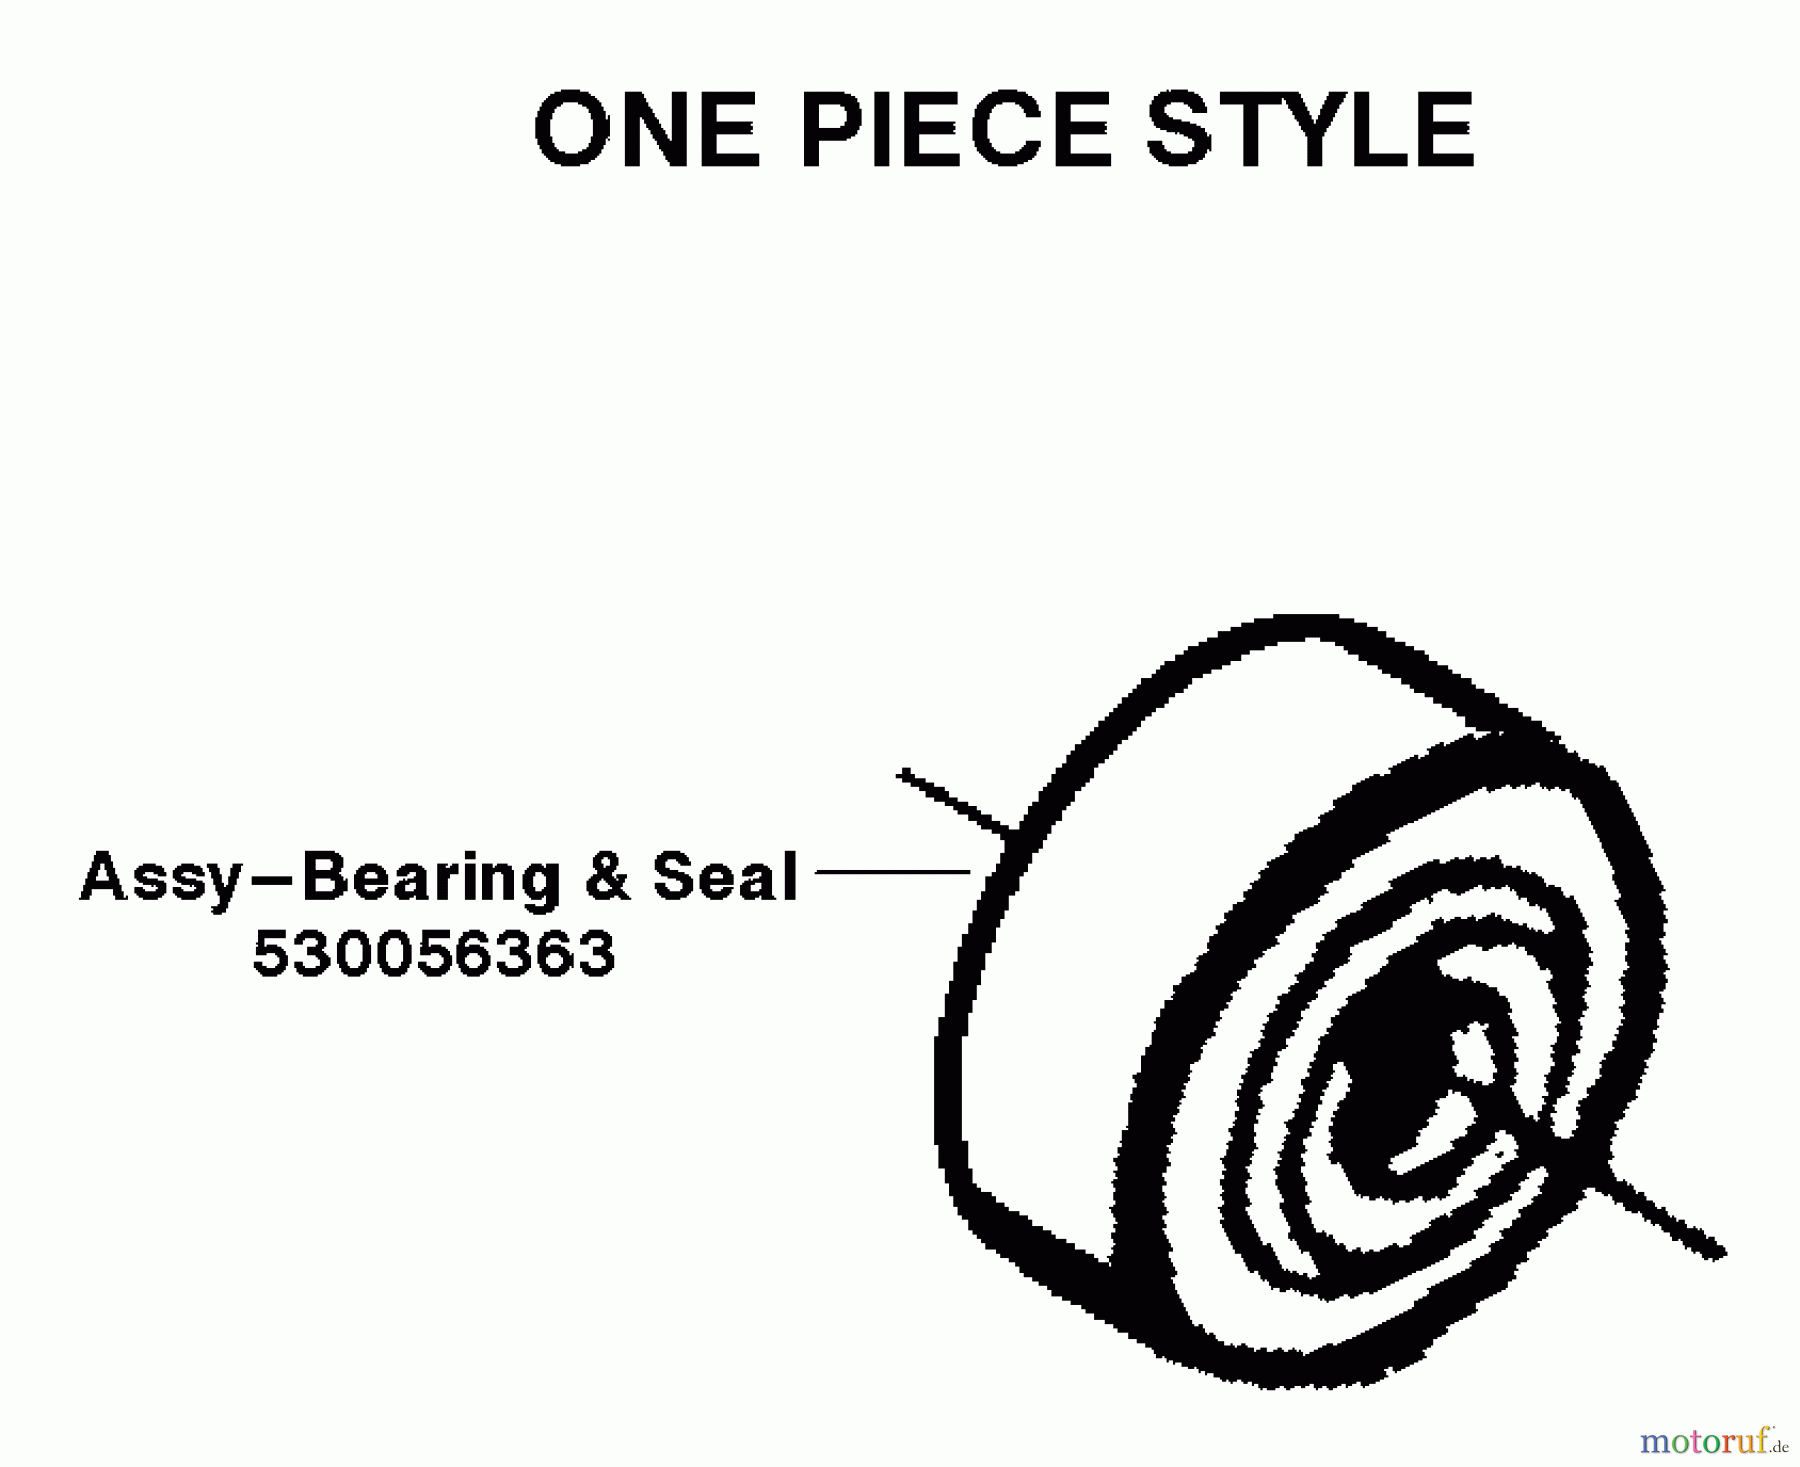  Poulan / Weed Eater Motorsägen PP295 (Type 4) - Poulan Pro Chainsaw Bearing & Seal - One Piece Style